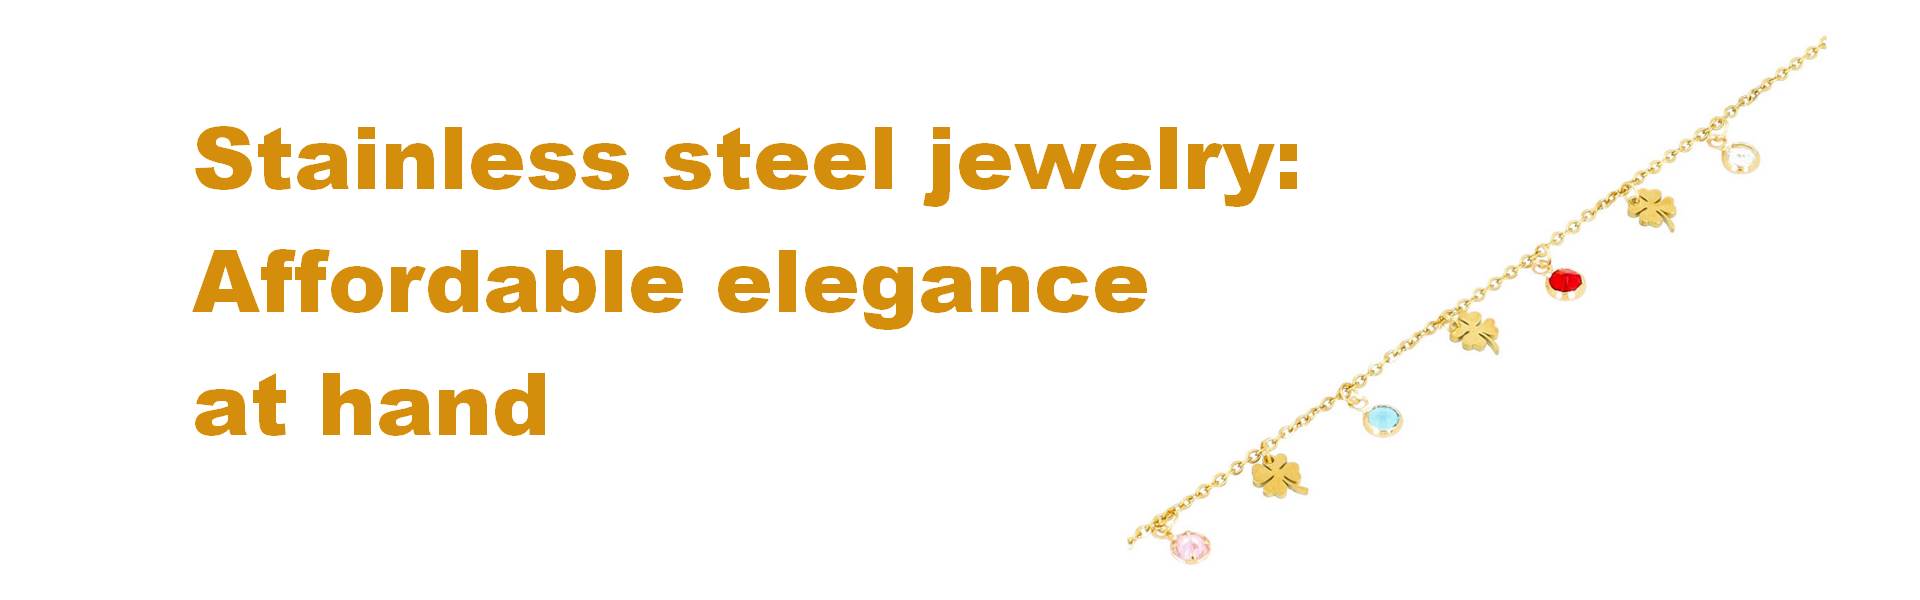 513816429/blog758385Cheap stainless steel jewelry.jpg - ModaServerPro